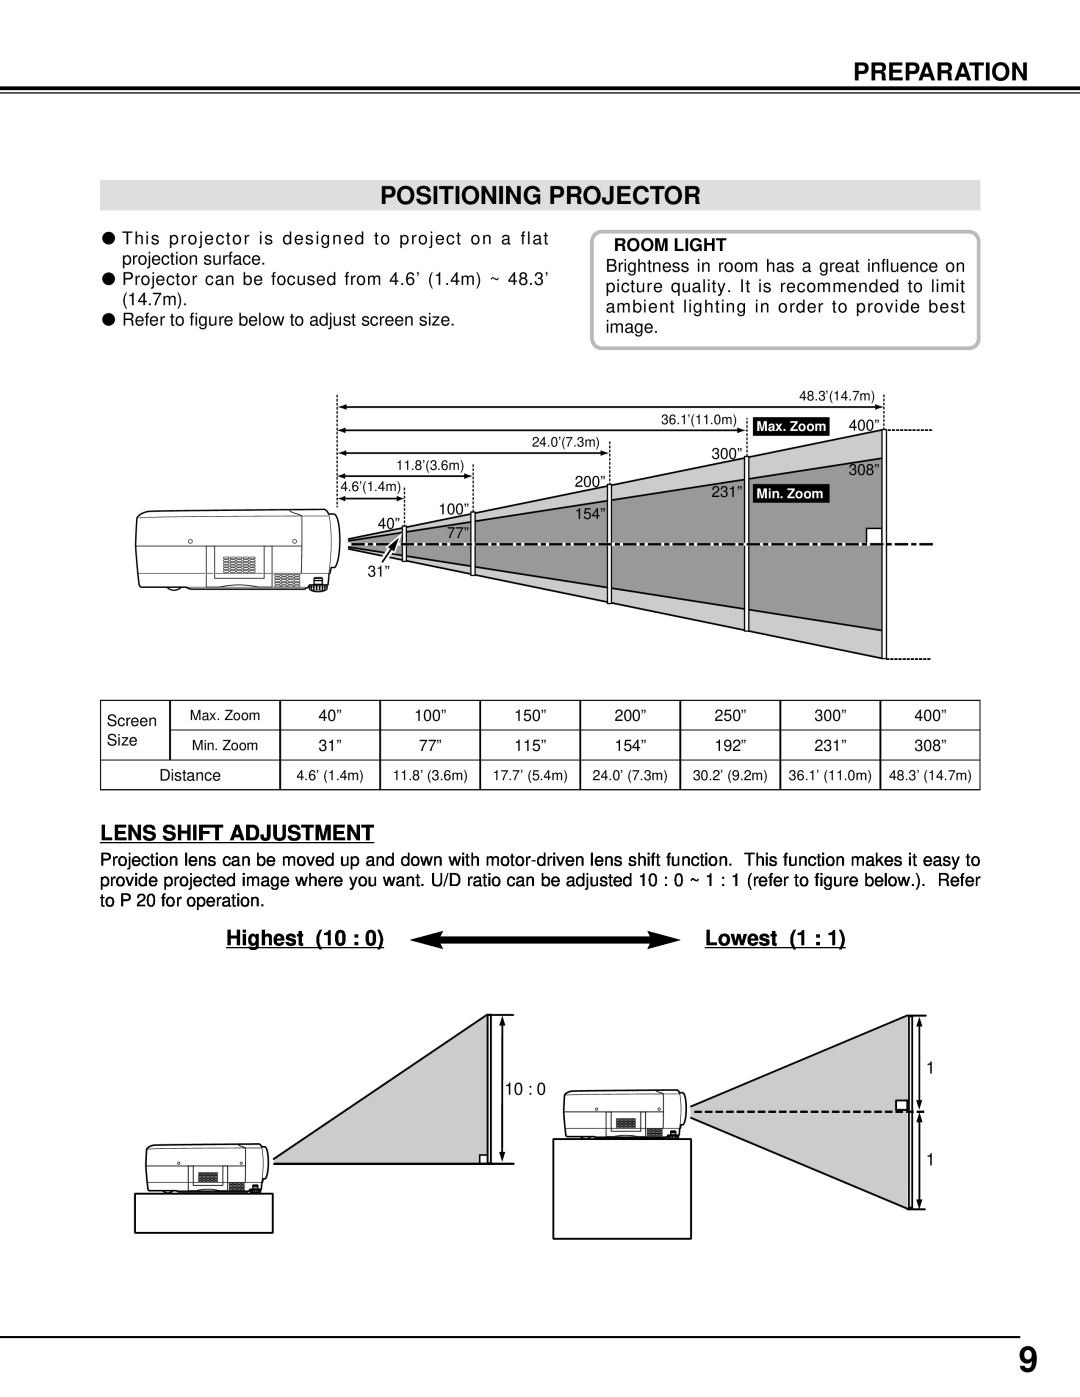 Eiki LC-X1000 instruction manual Preparation Positioning Projector, Lens Shift Adjustment, Highest, Lowest 